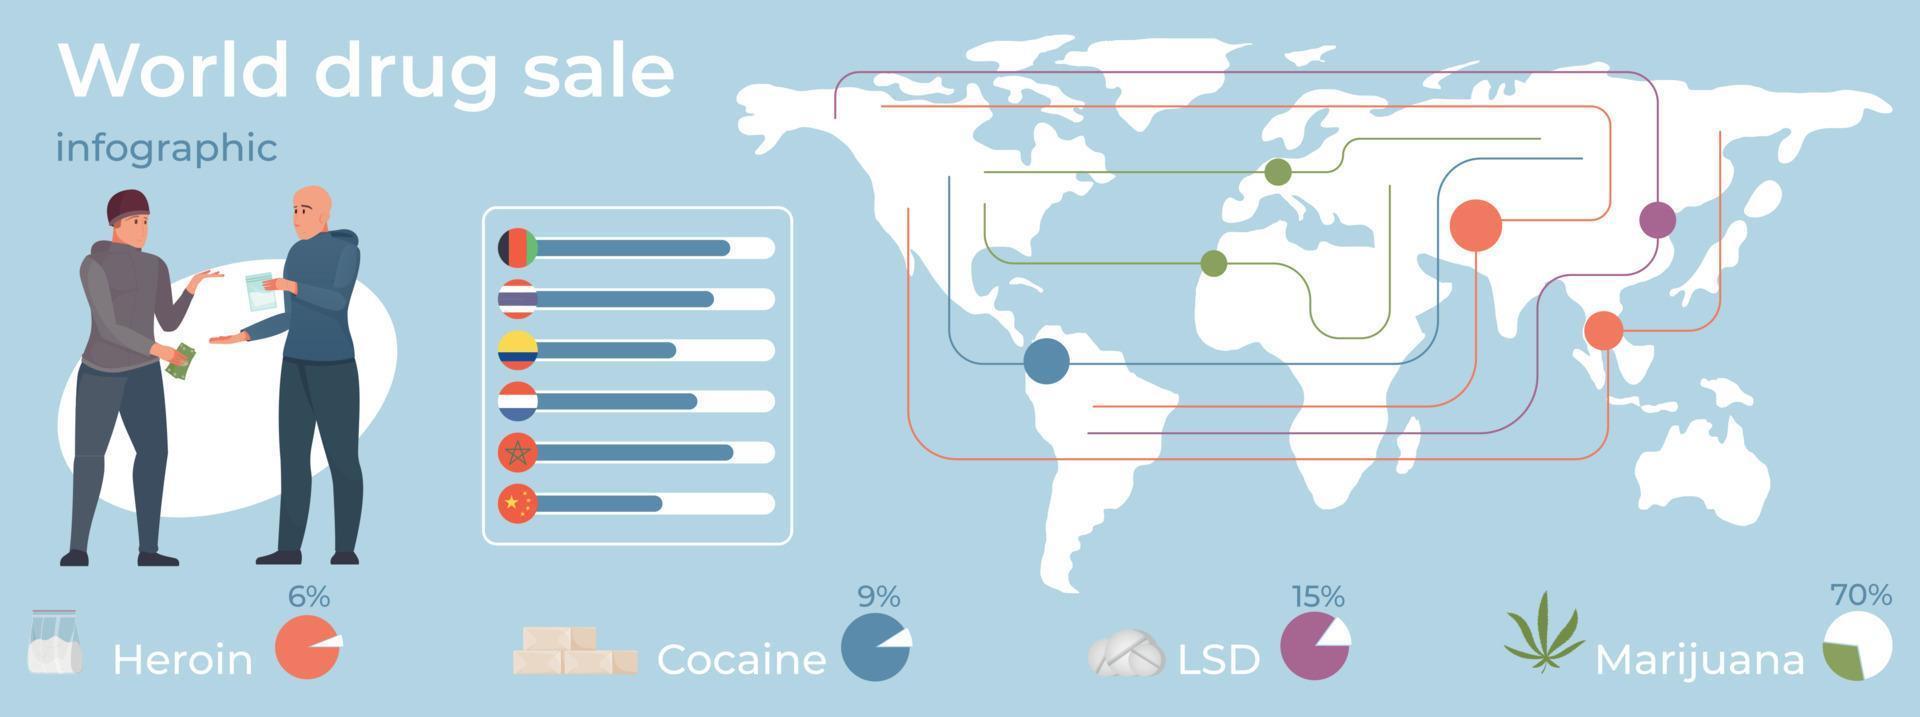 infografías planas de tráfico de drogas vector